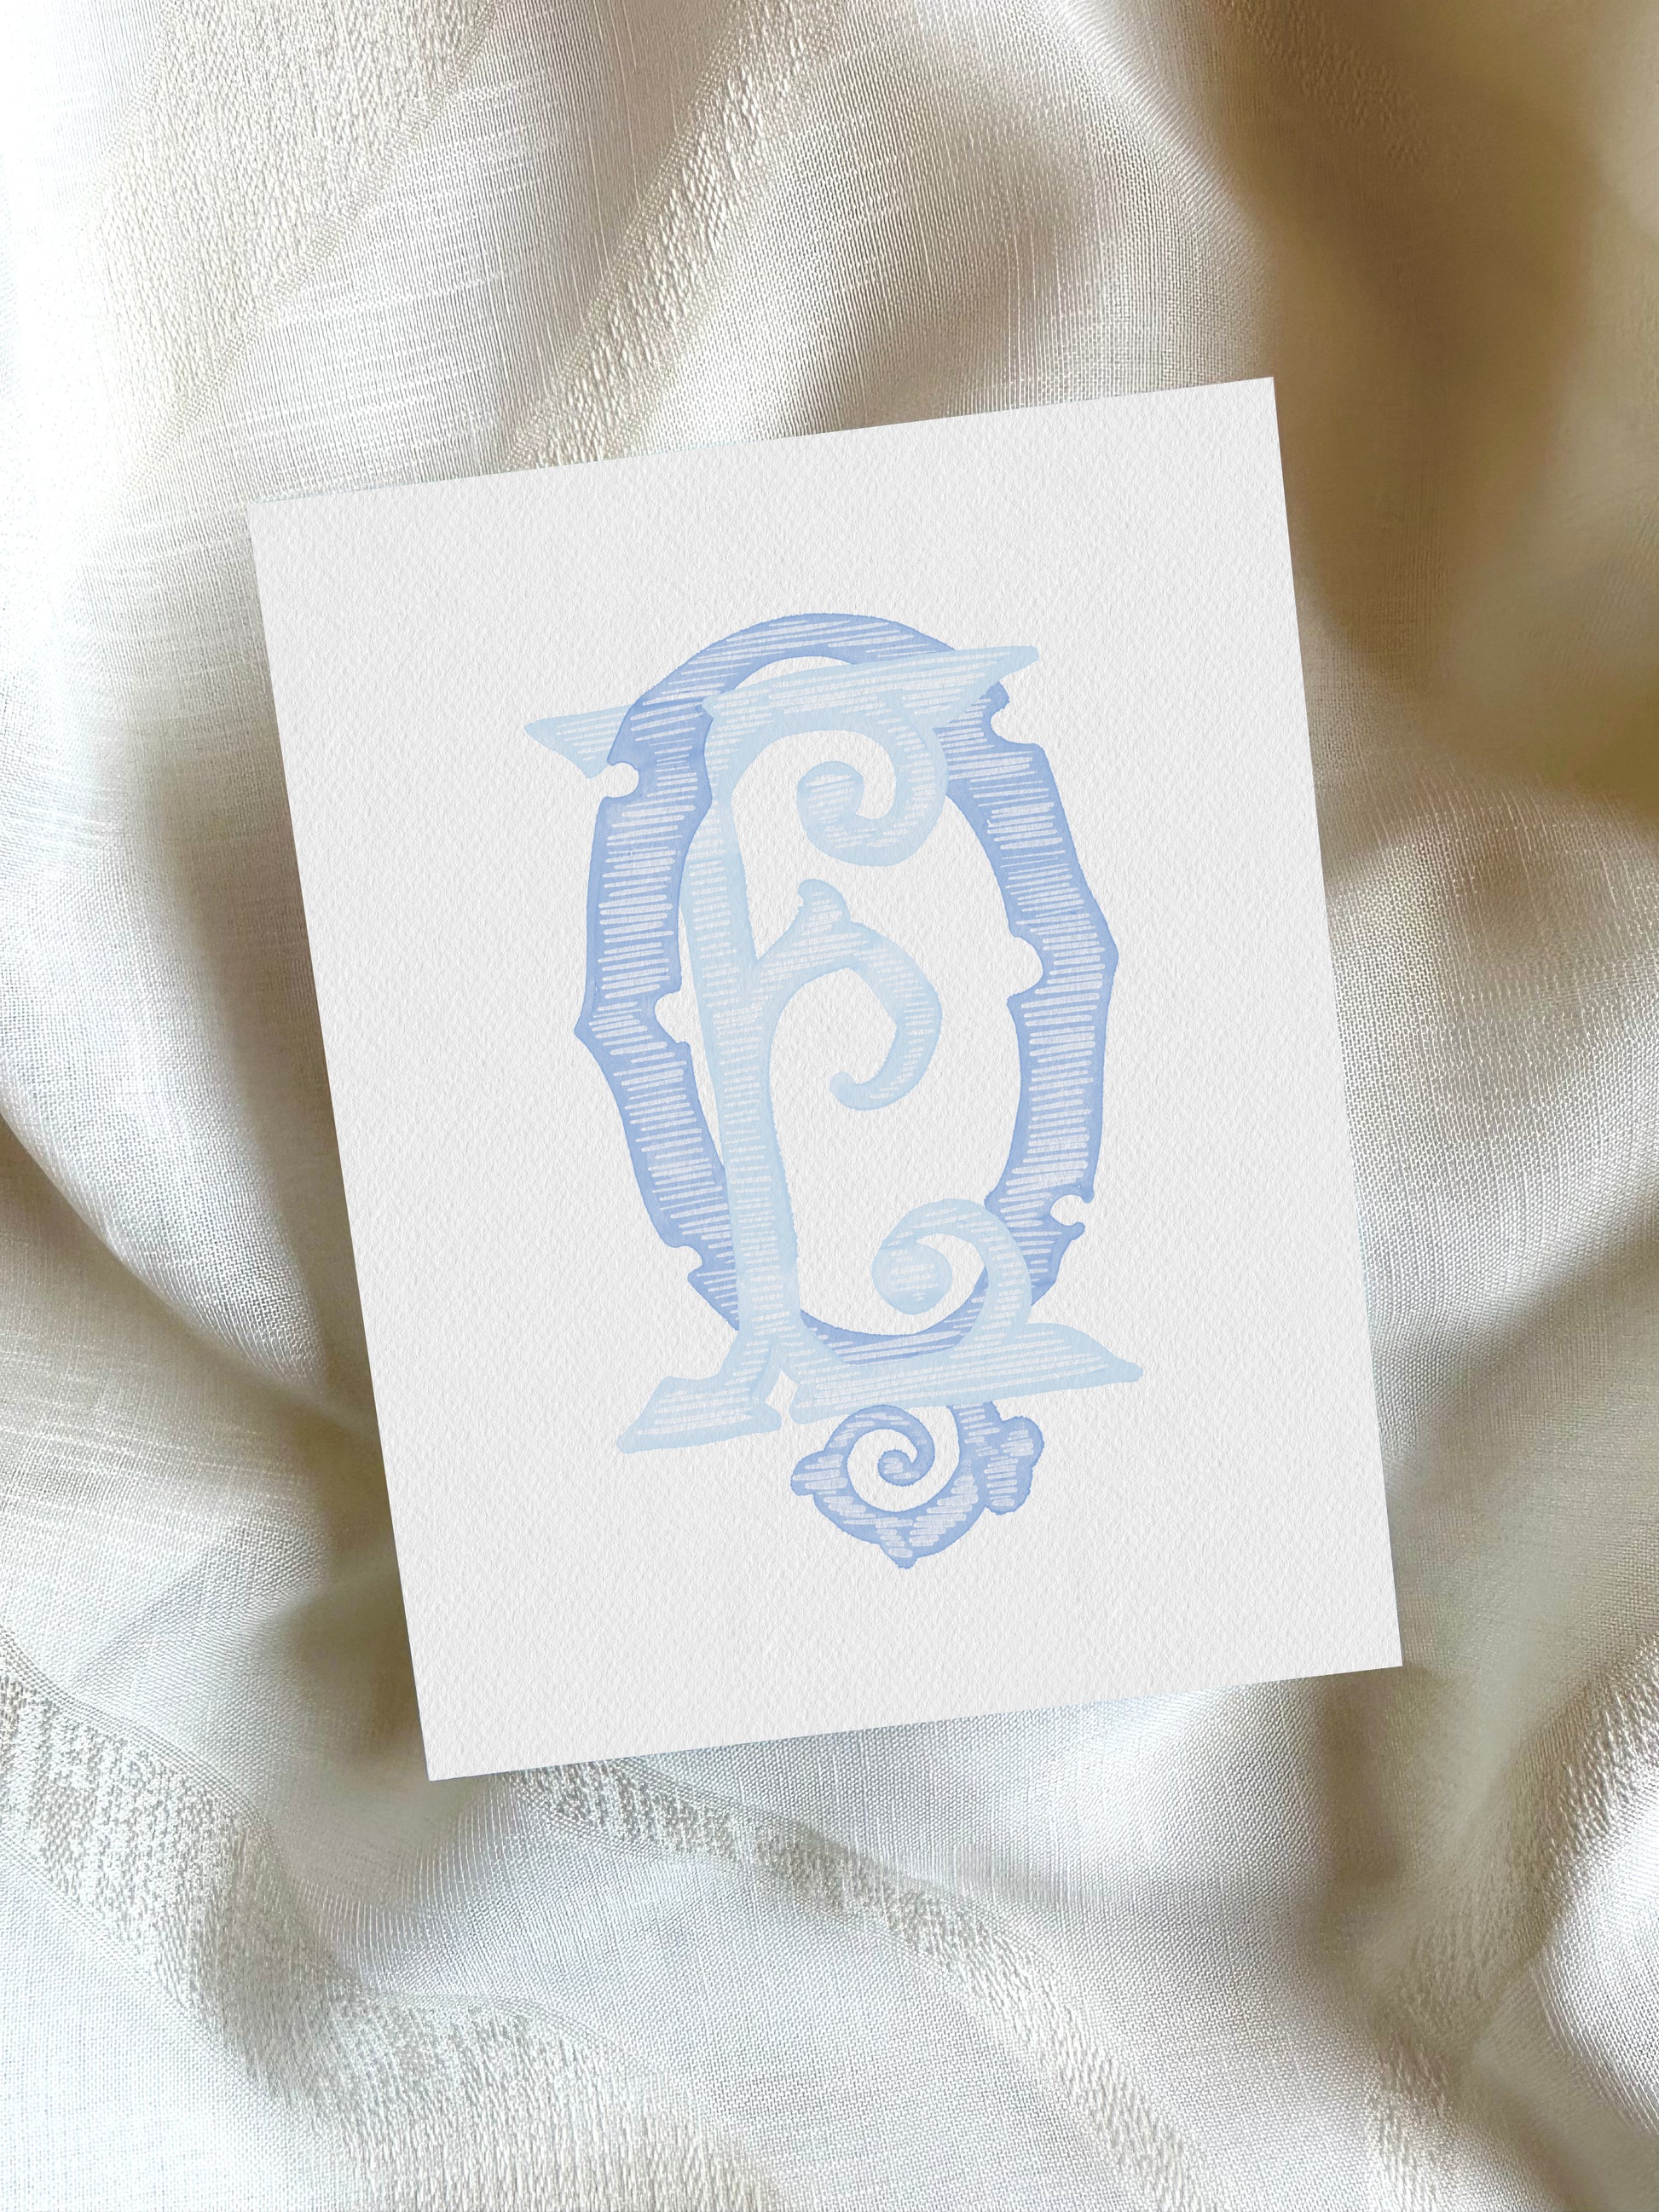 2 Letter Monogram with Letters EQ QE | Digital Download - Wedding Monogram SVG, Personal Logo, Wedding Logo for Wedding Invitations The Wedding Crest Lab